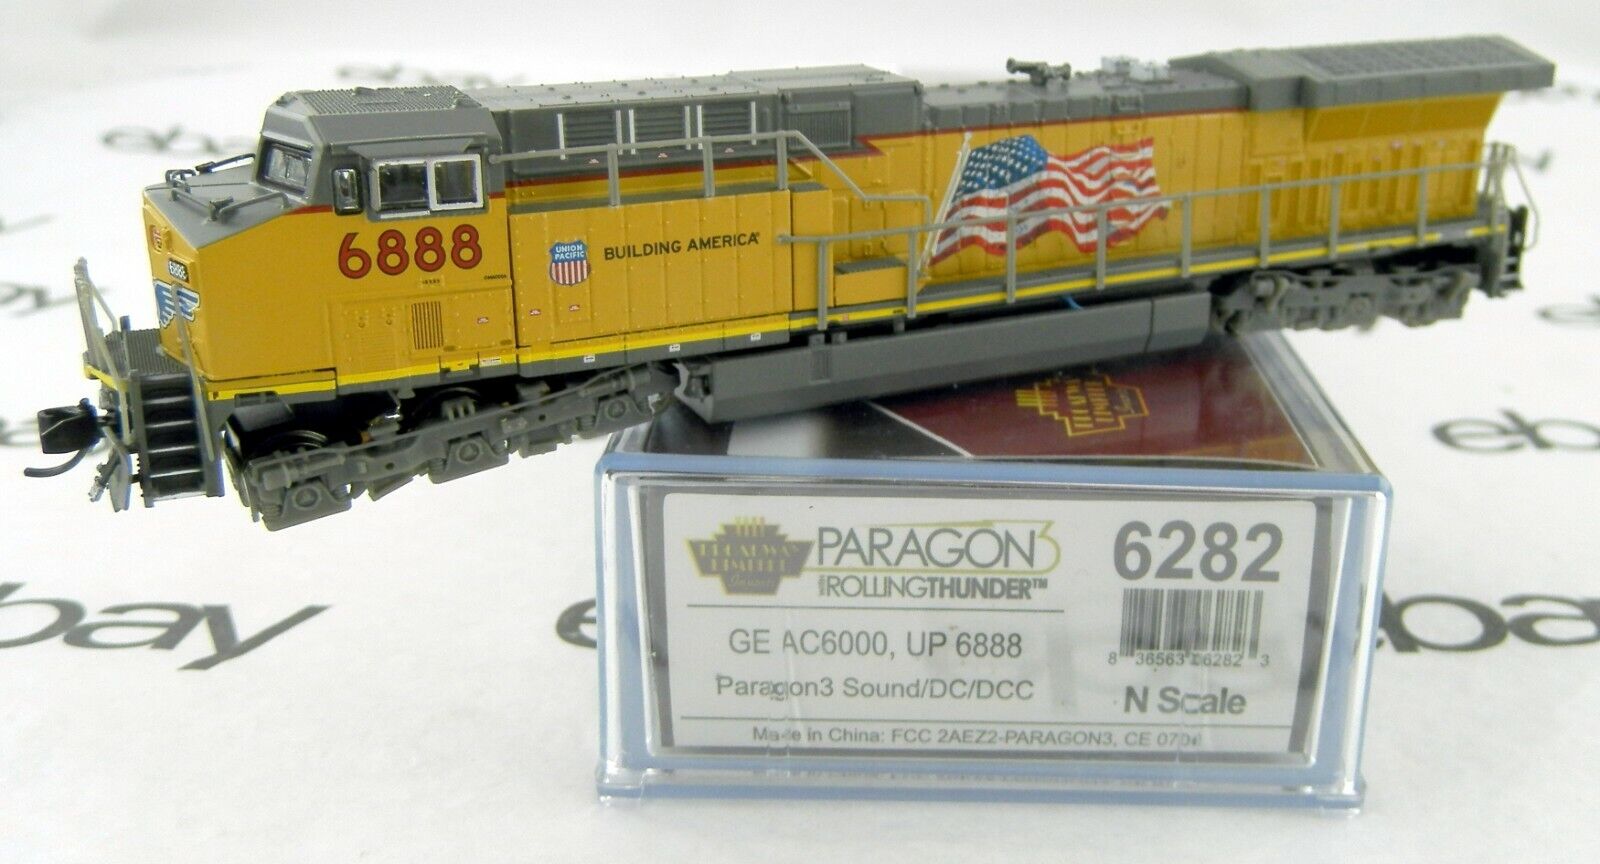 N Scale GE AC6000 Locomotive w/DCC & Sound - Union Pacific #6888 - BLI #6282